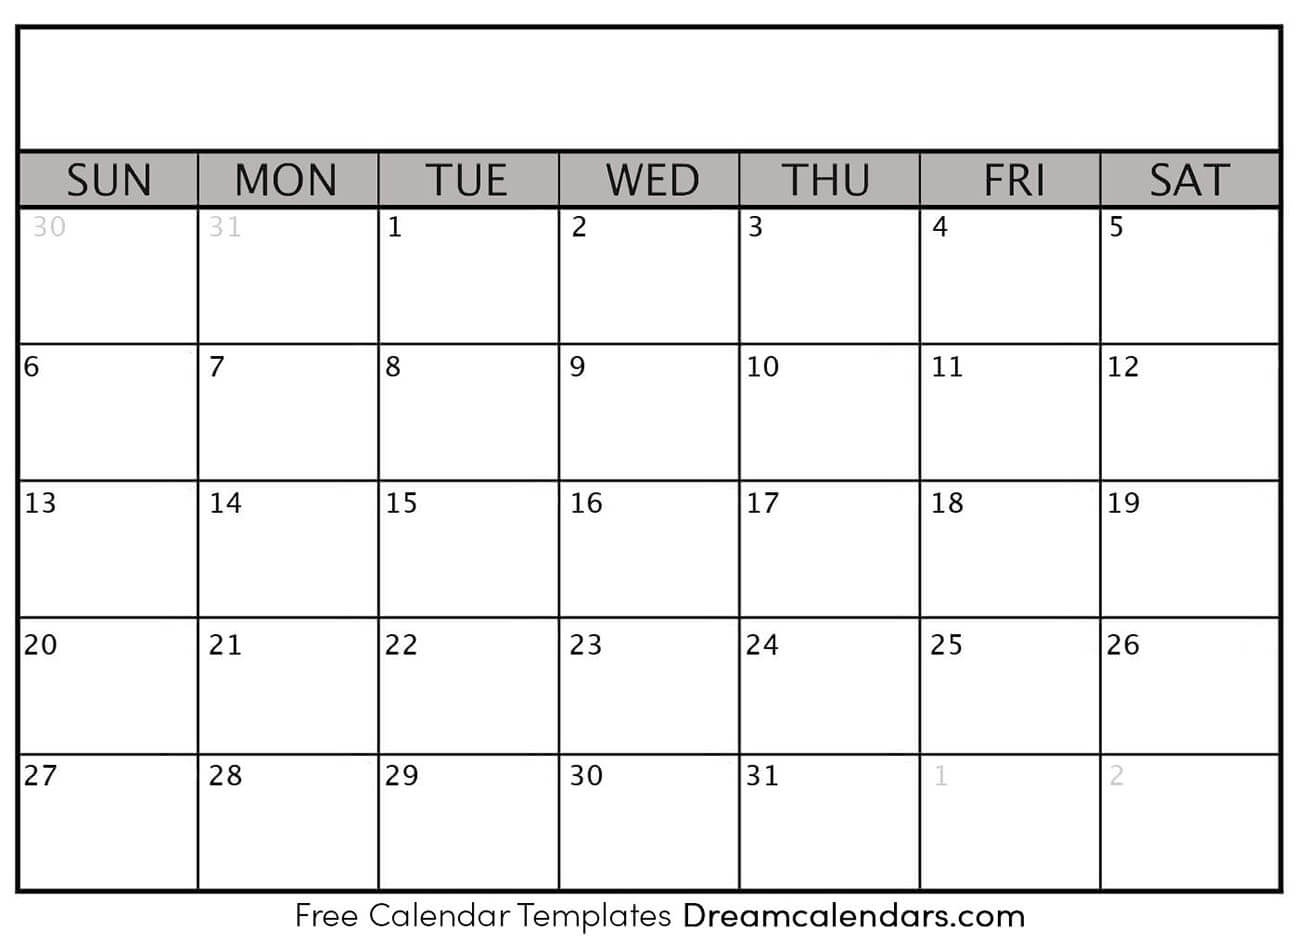 Printable Blank Calendar 2020 | Dream Calendars 2020 Calendar Template That Has Days Numbered